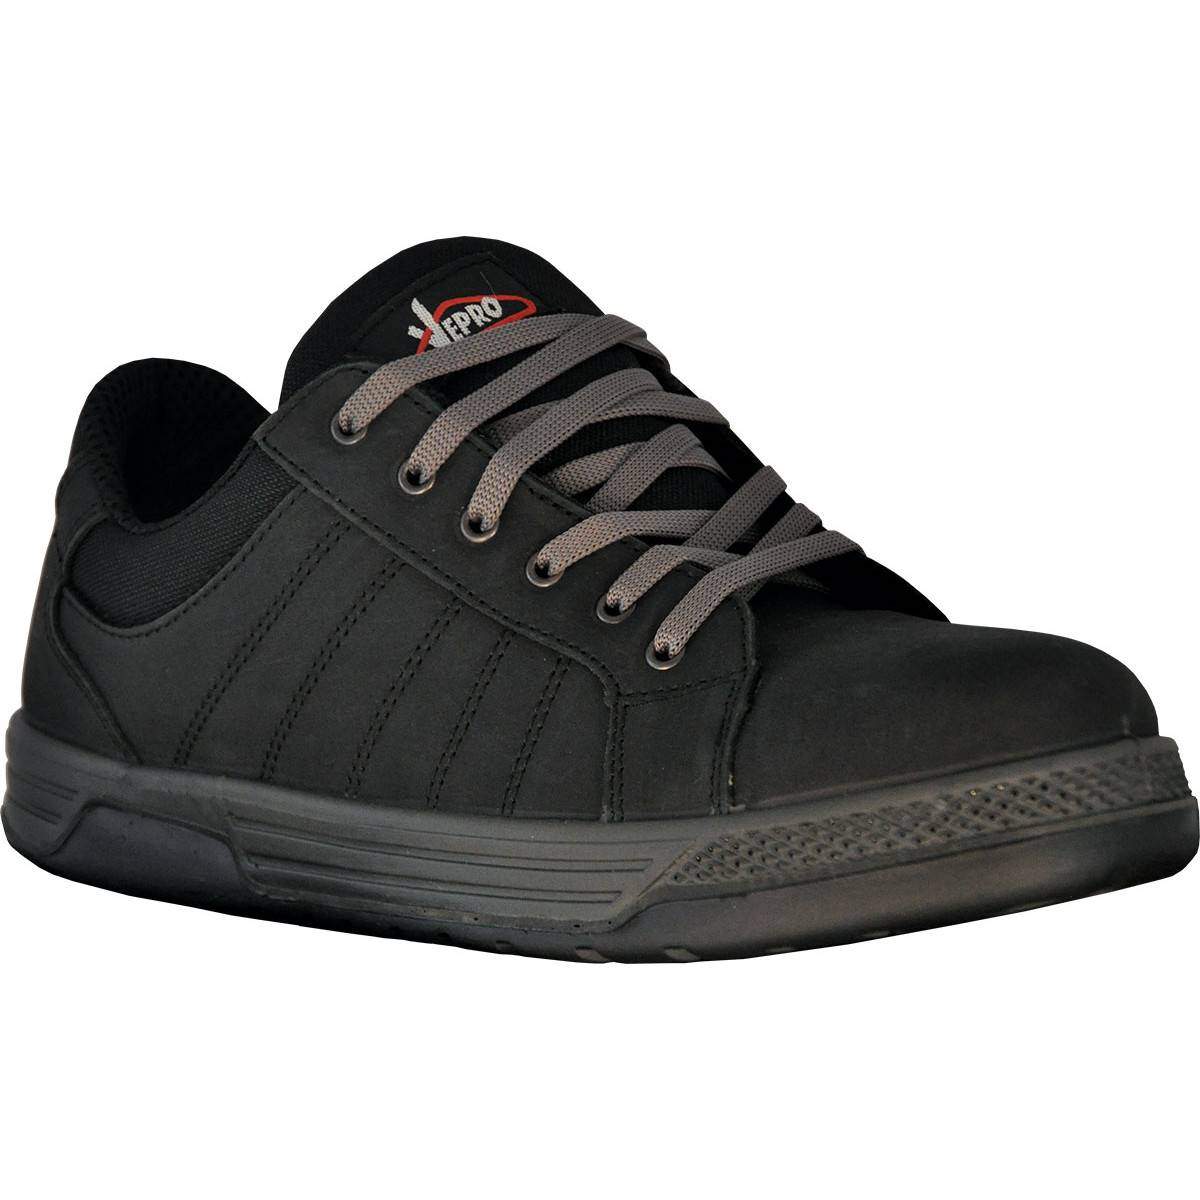 MANIBASSE low safety shoes size 42, black nubuck leather